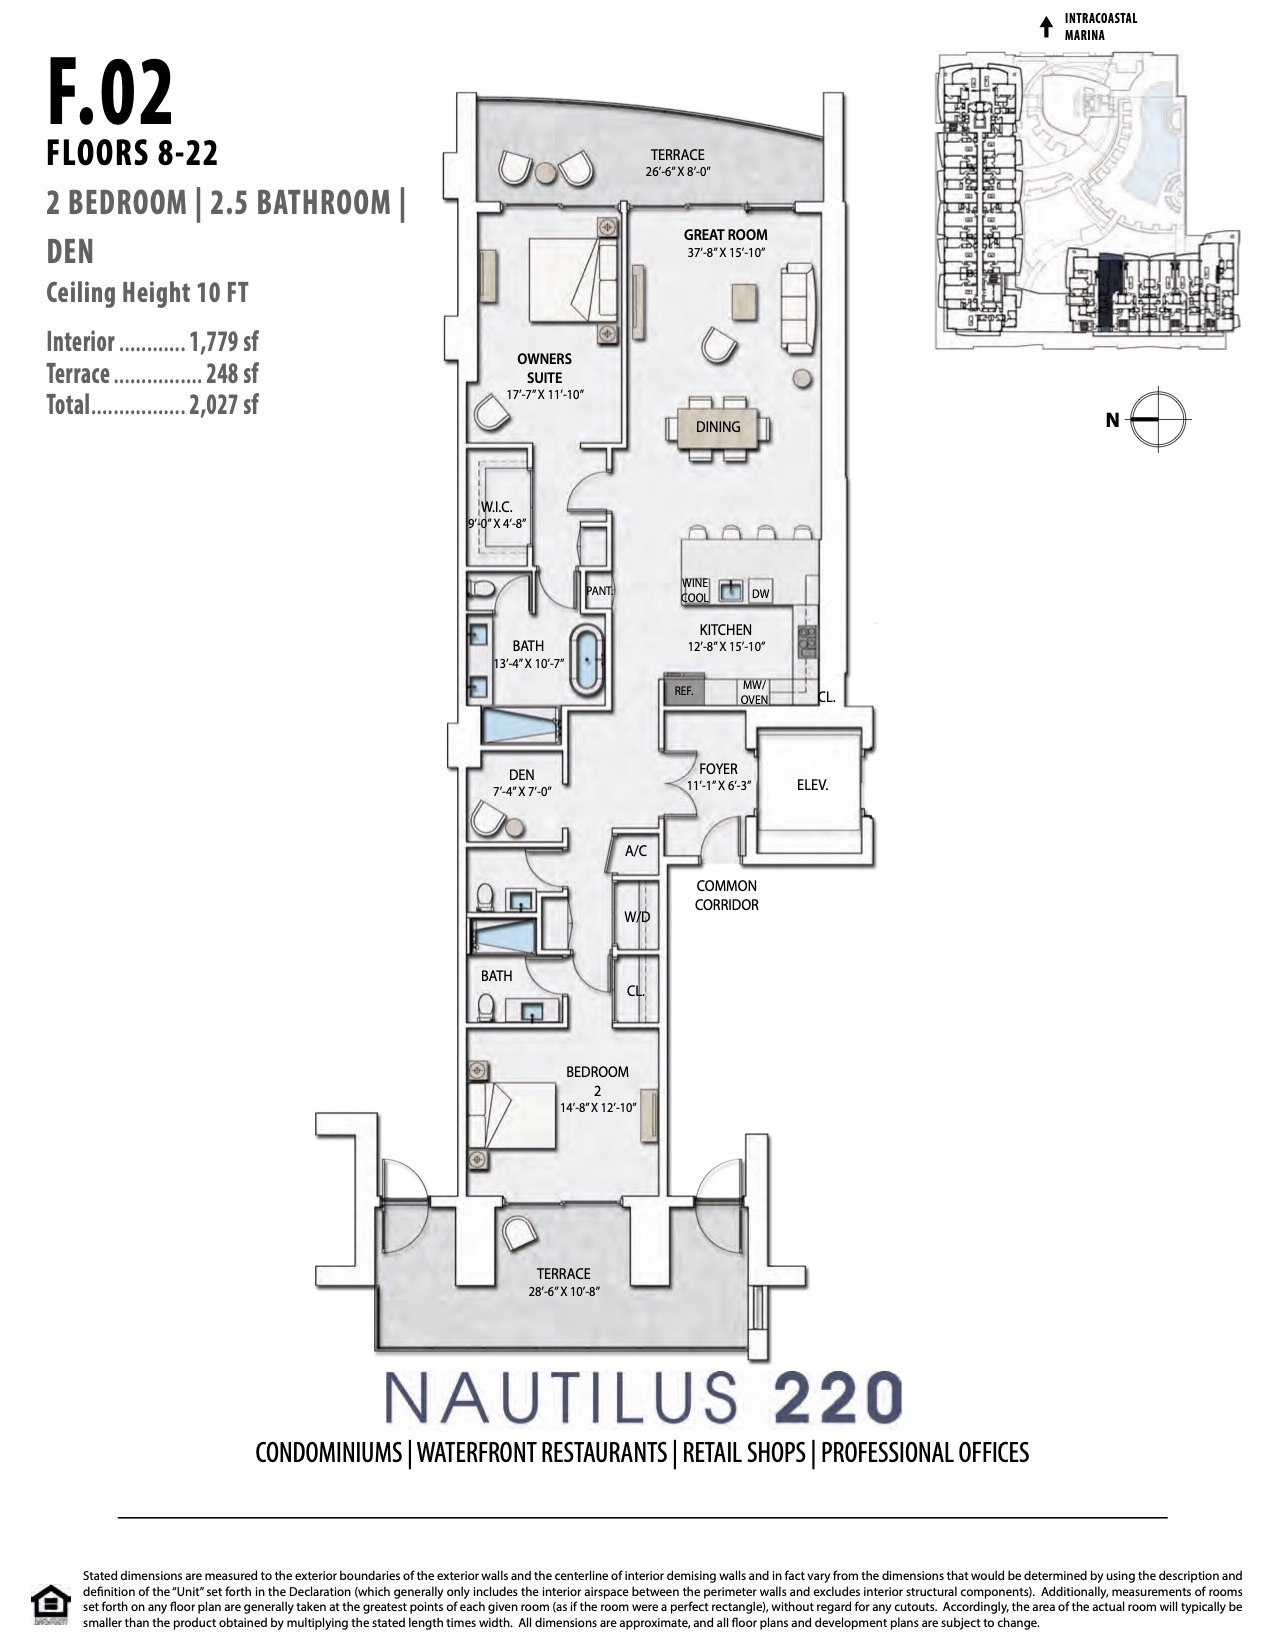 Floor Plan for Nautilus 220 Floorplans, F.02